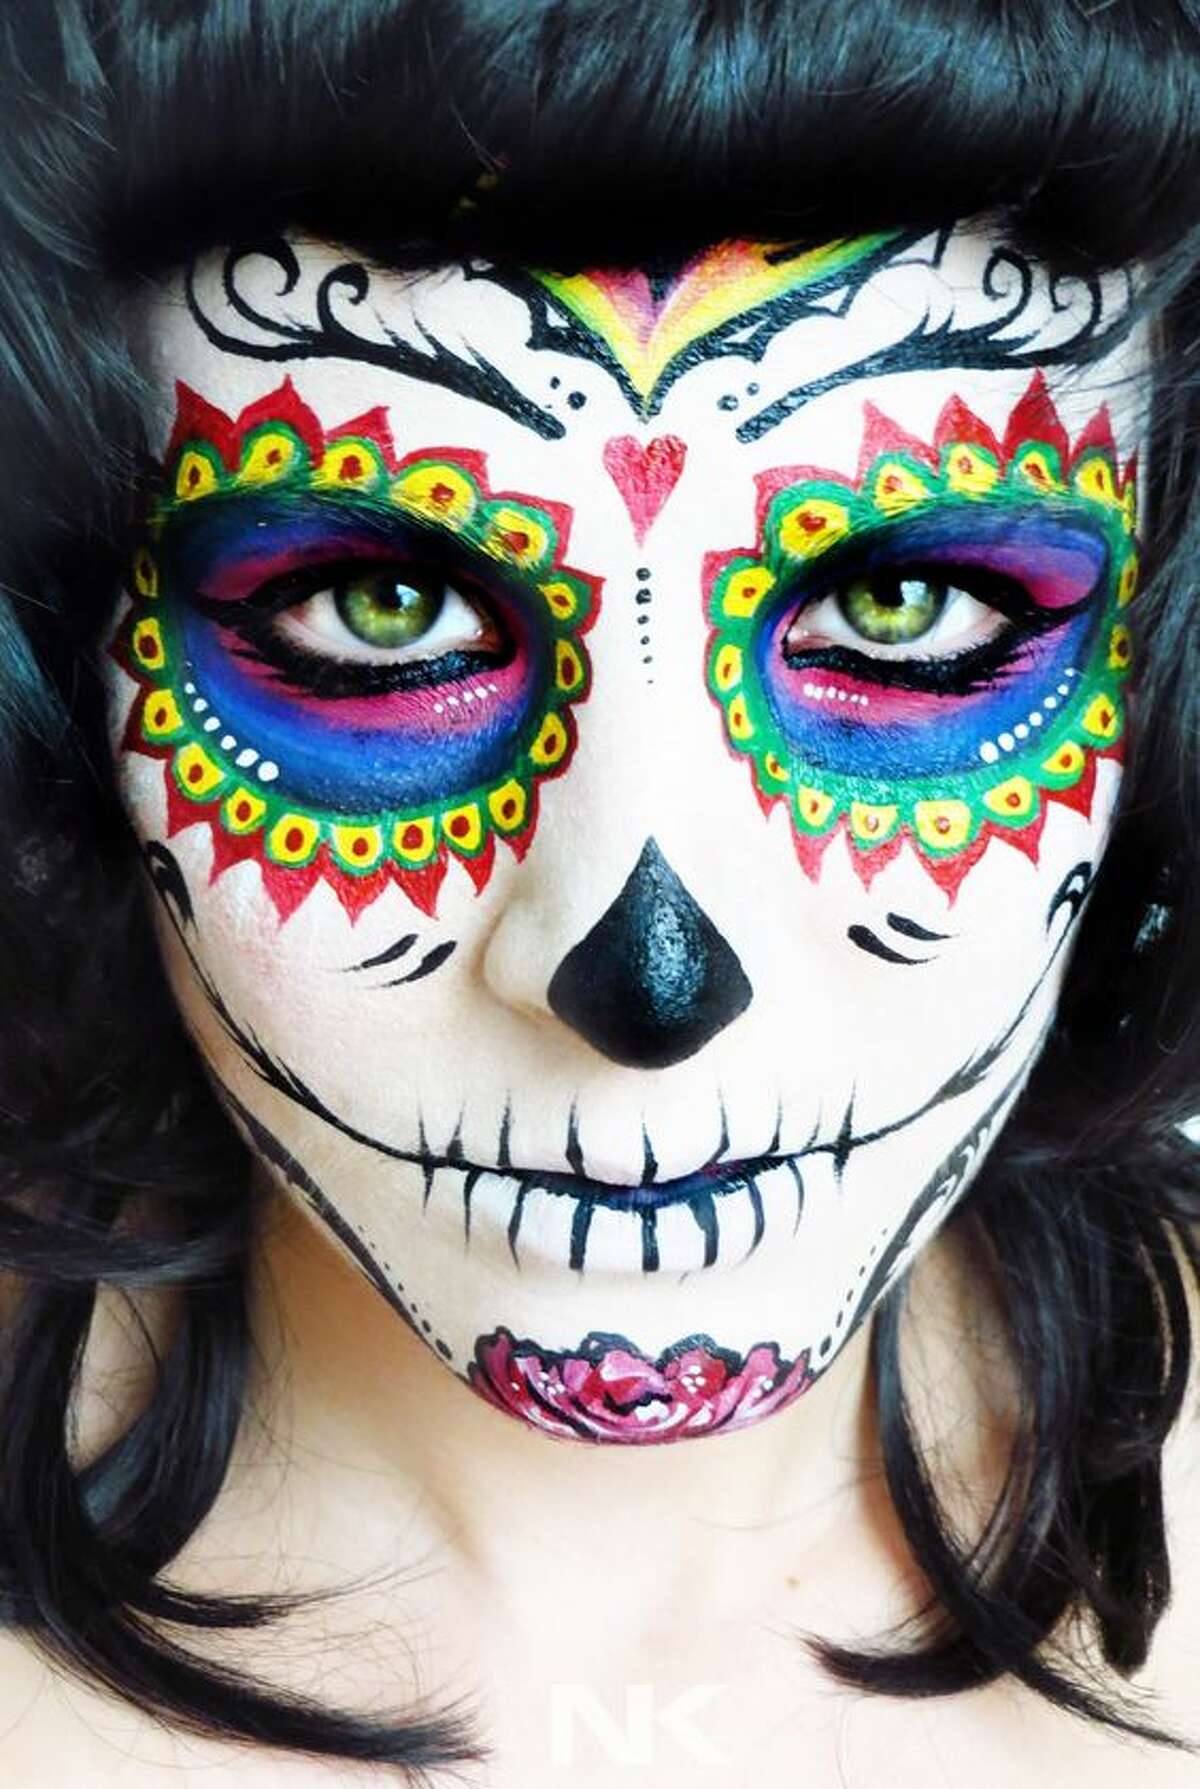 Amazing inspirations for Dia de los Muertos makeup